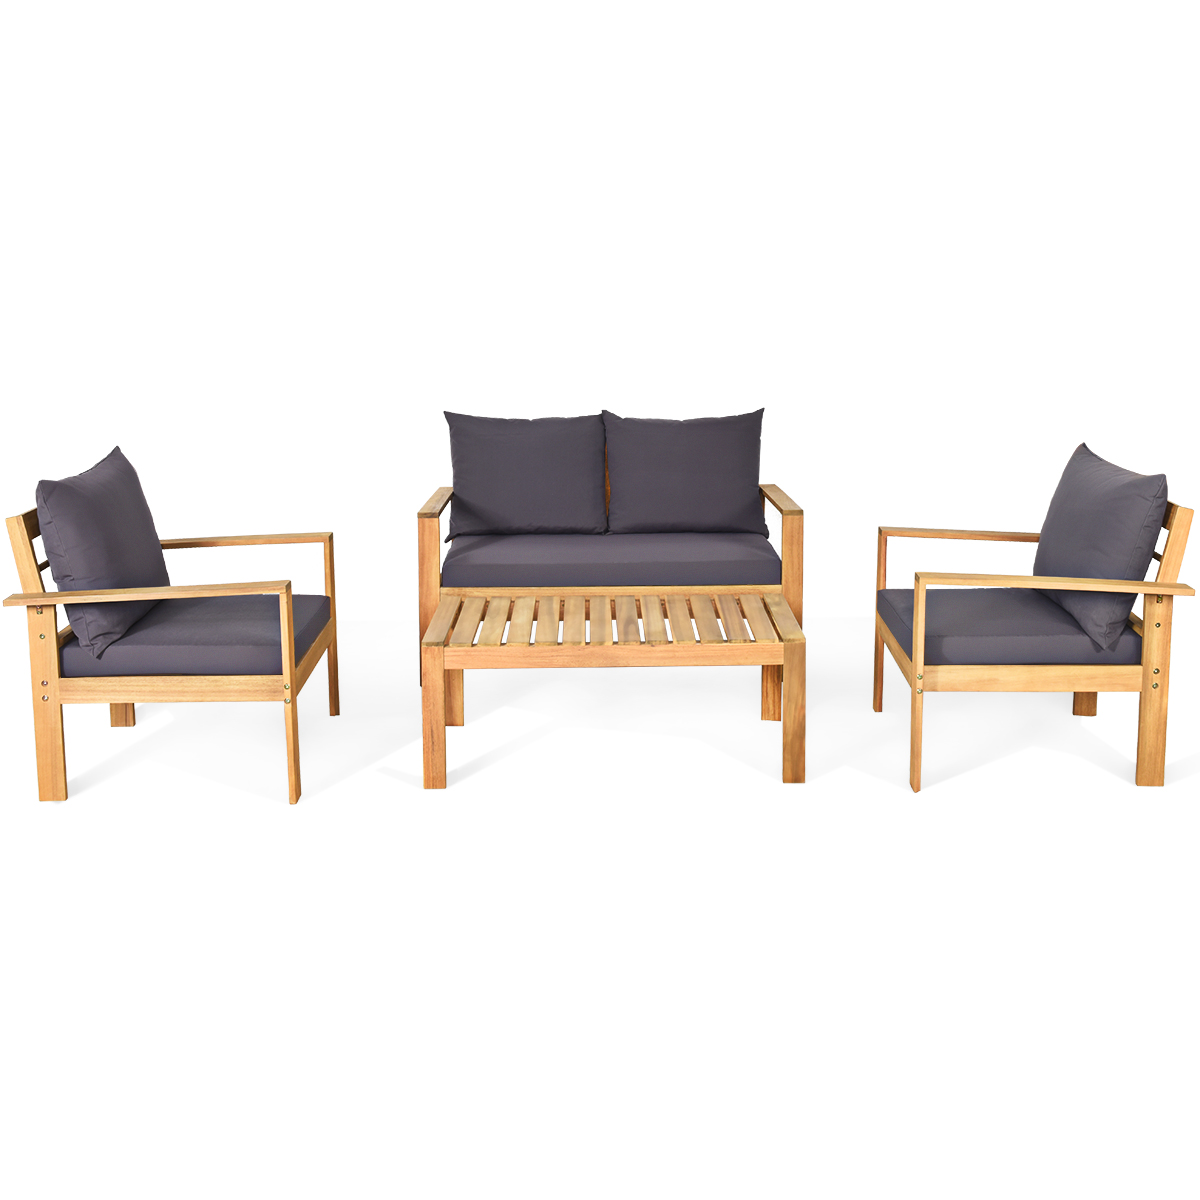 Topbuy 4 PCS Outdoor Acacia Wood Conversation Sofa Table Furniture Set W/ Grey Cushions